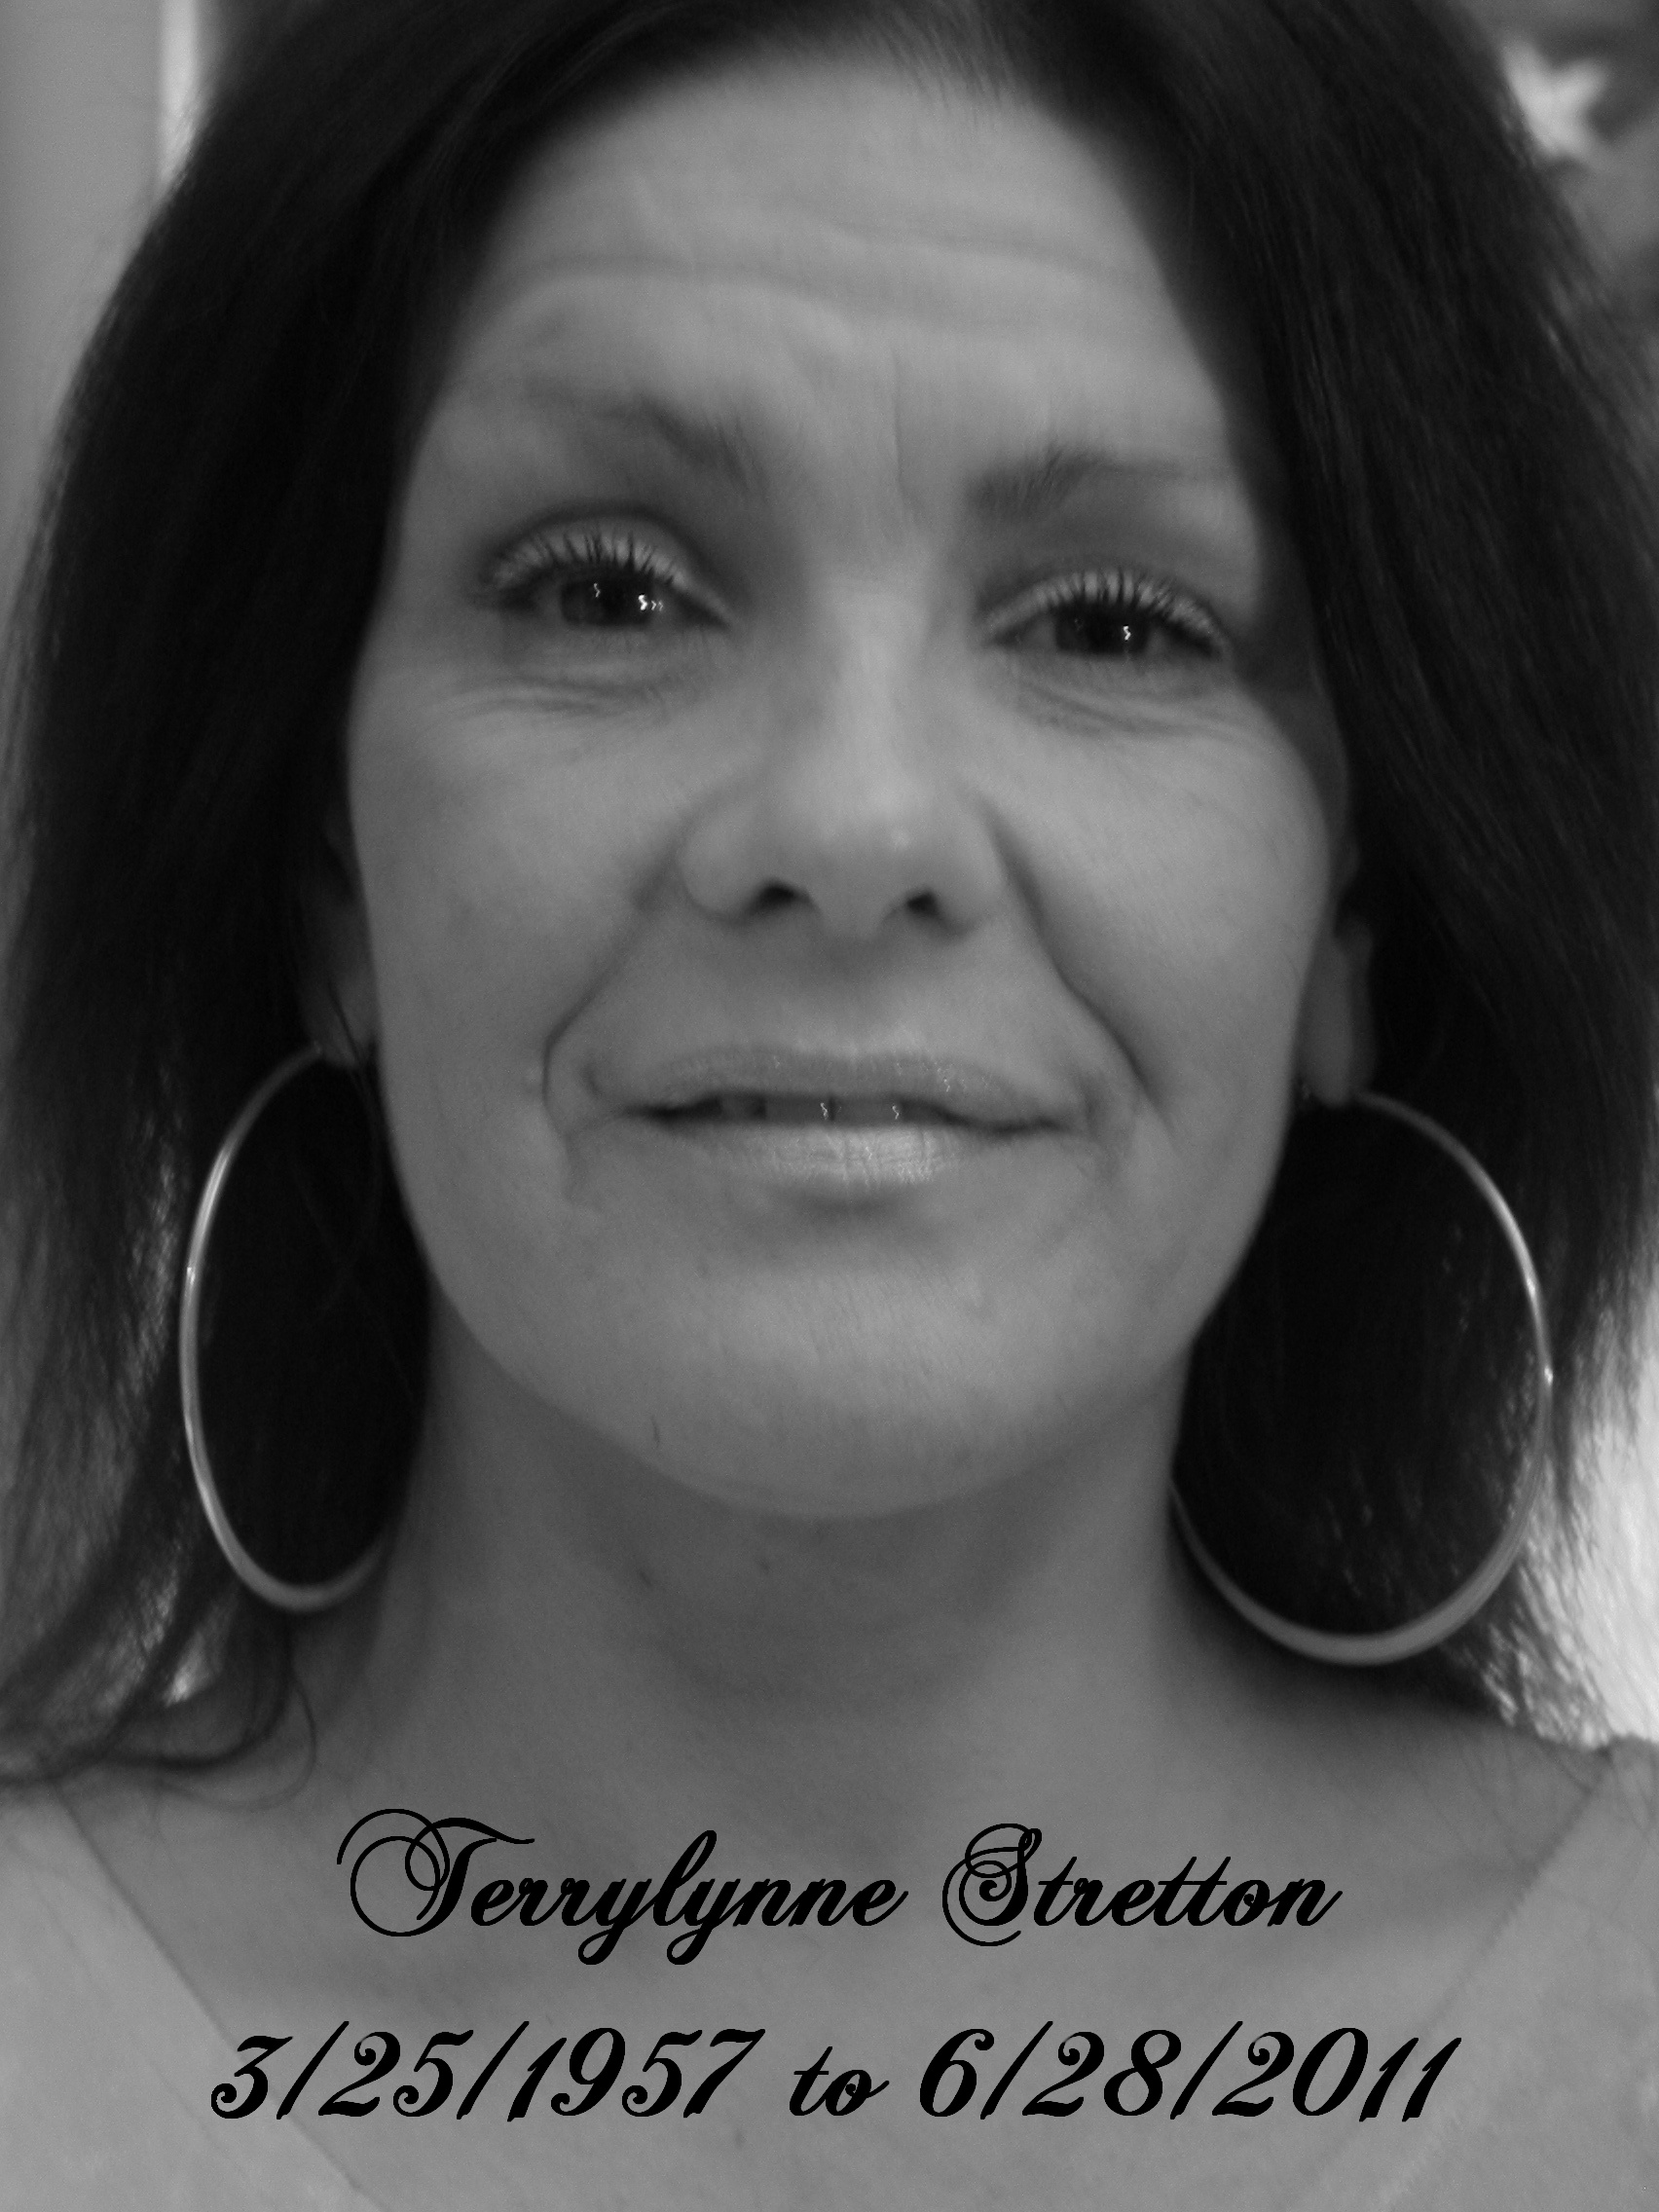 Terrylynne Stretton / 3/25/1957 to 6/28/2011